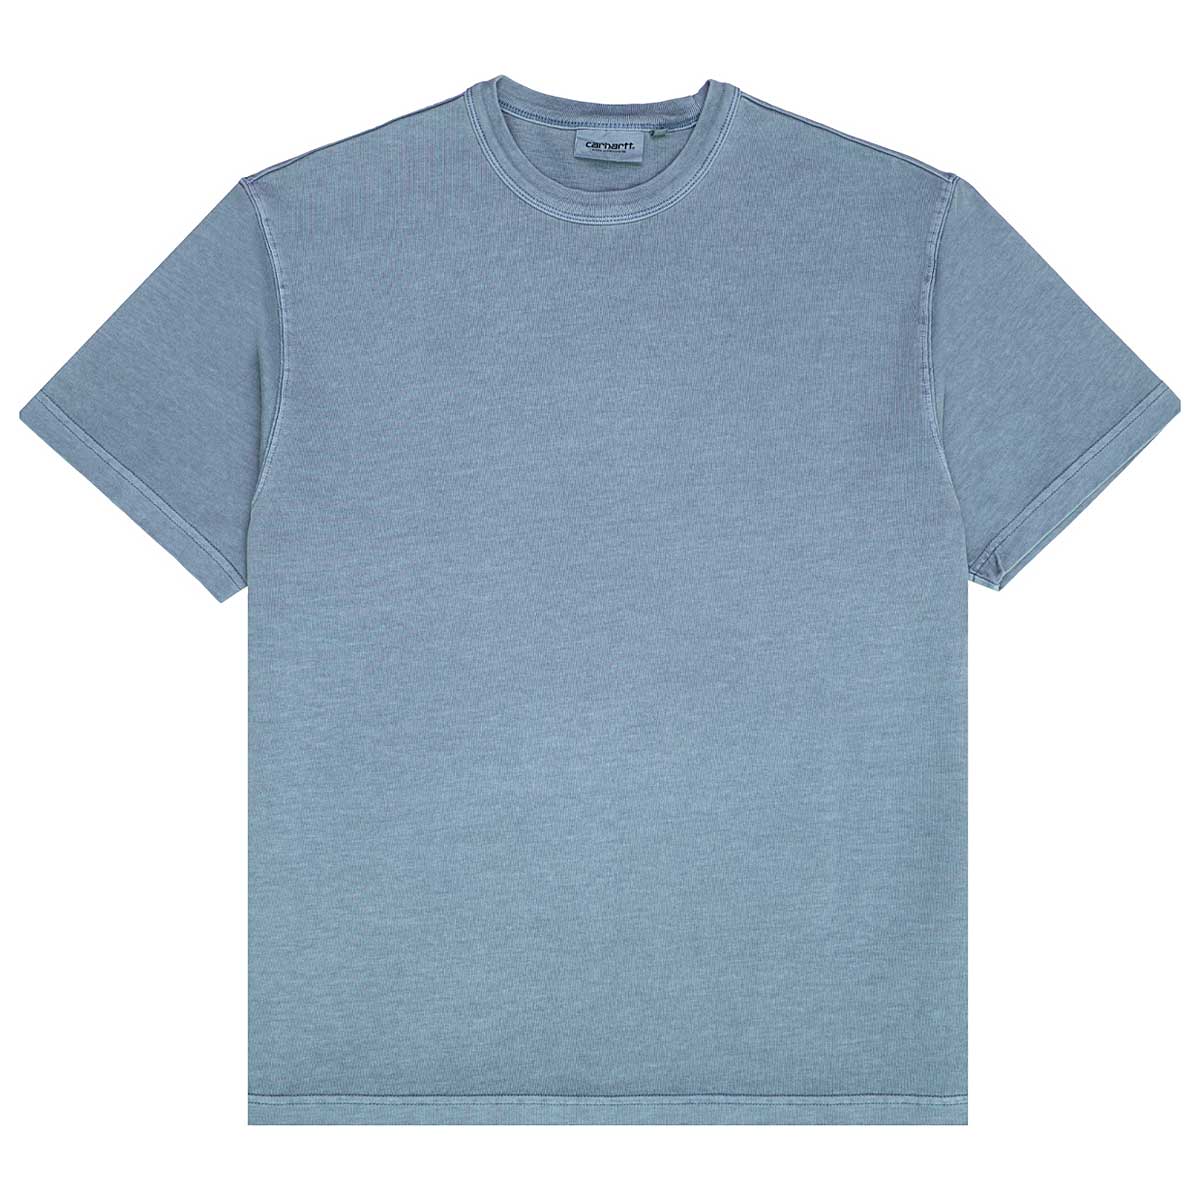 Carhartt Wip Taos T-shirt, Blau/blau L